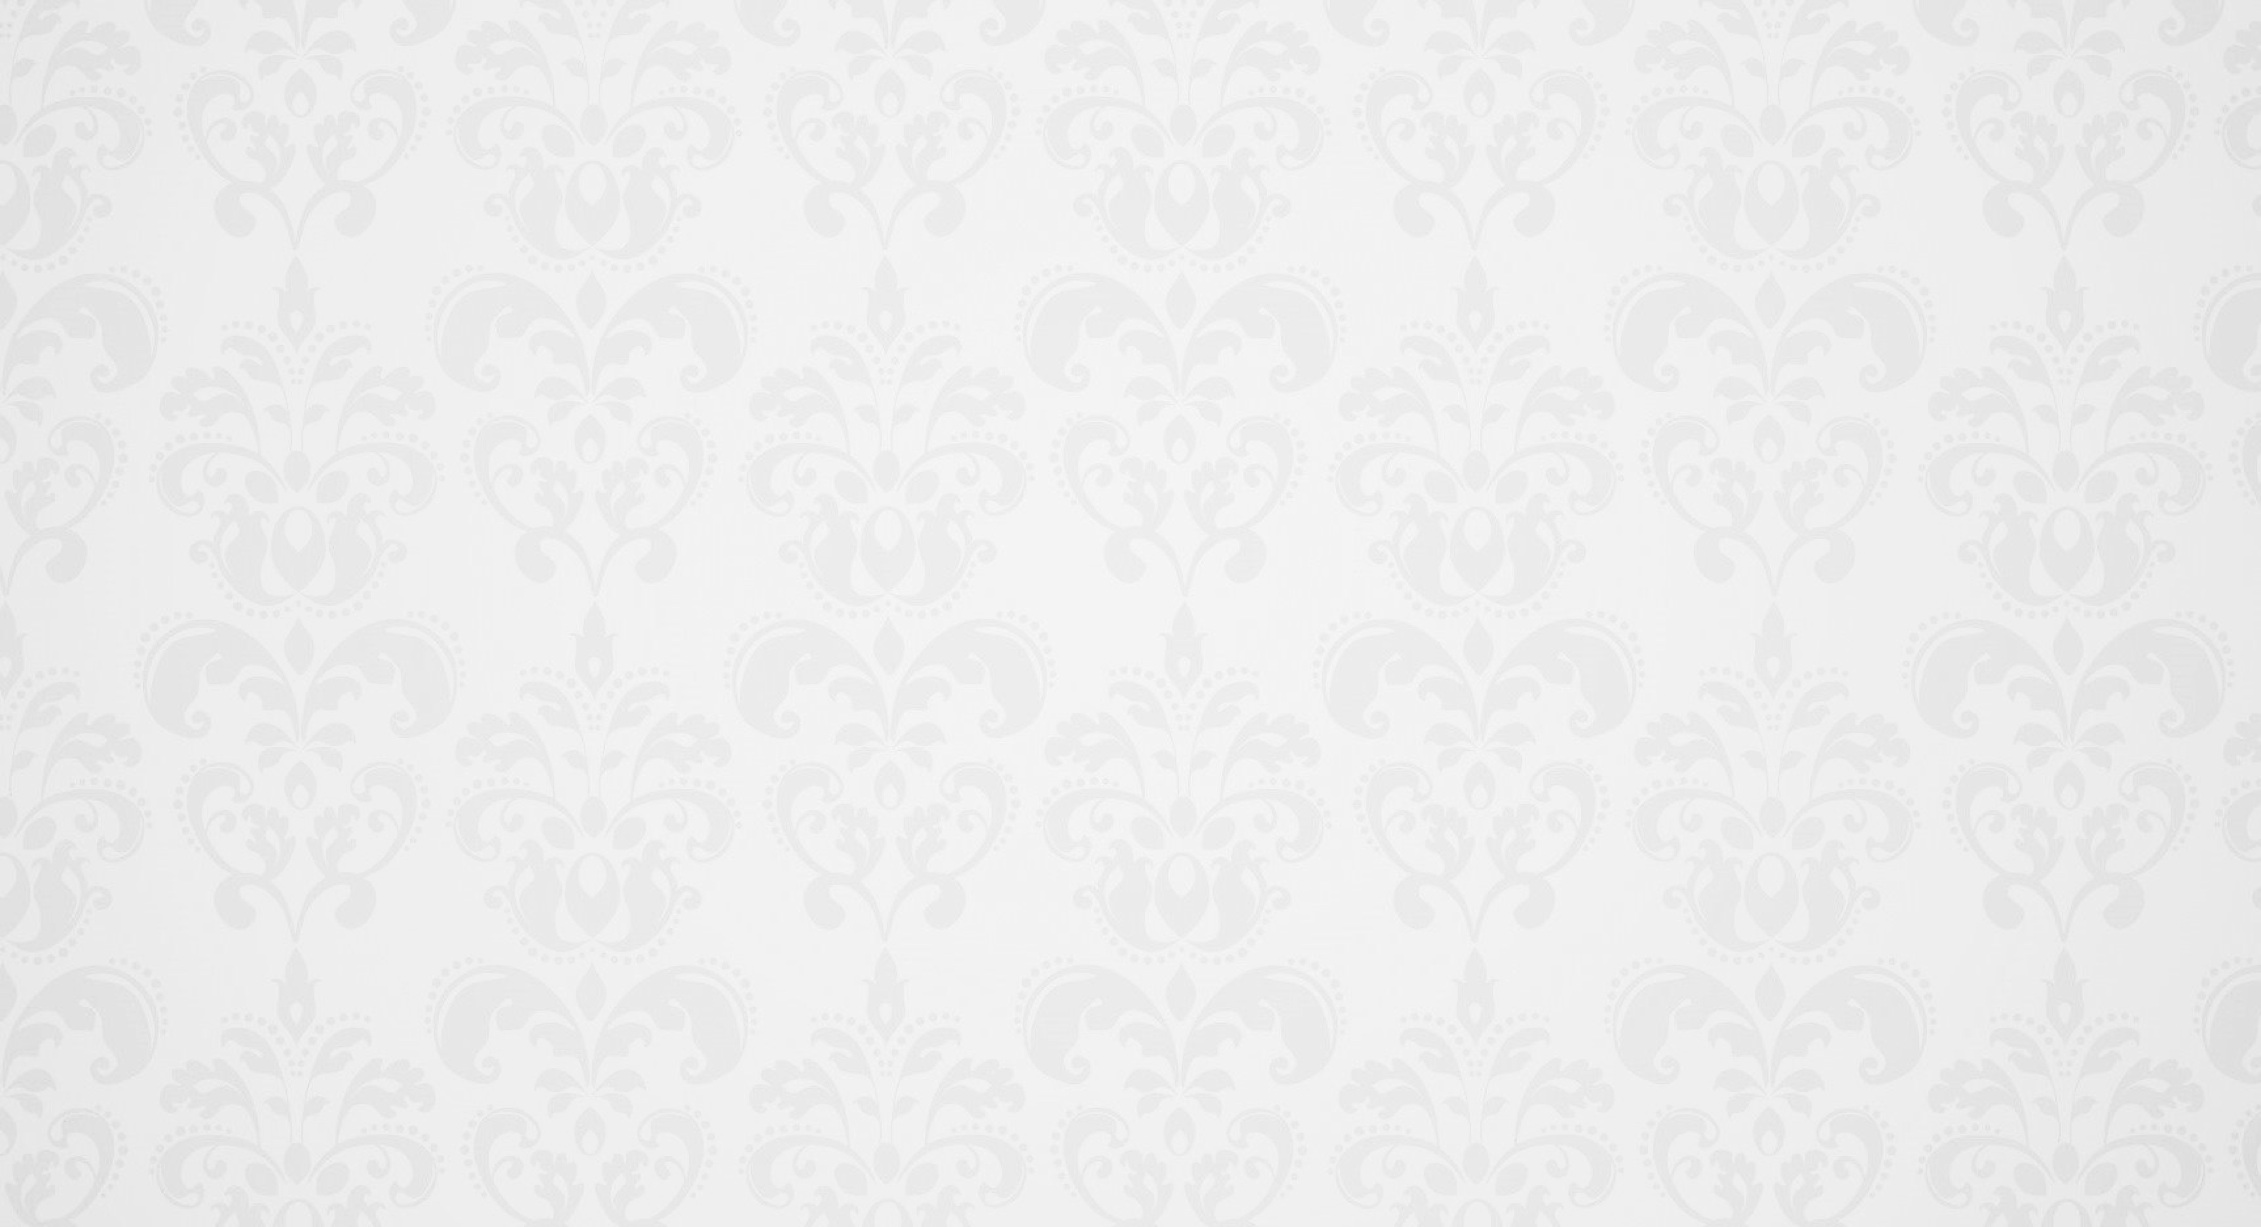 White Damask Background White damask pattern 1 2261x1227